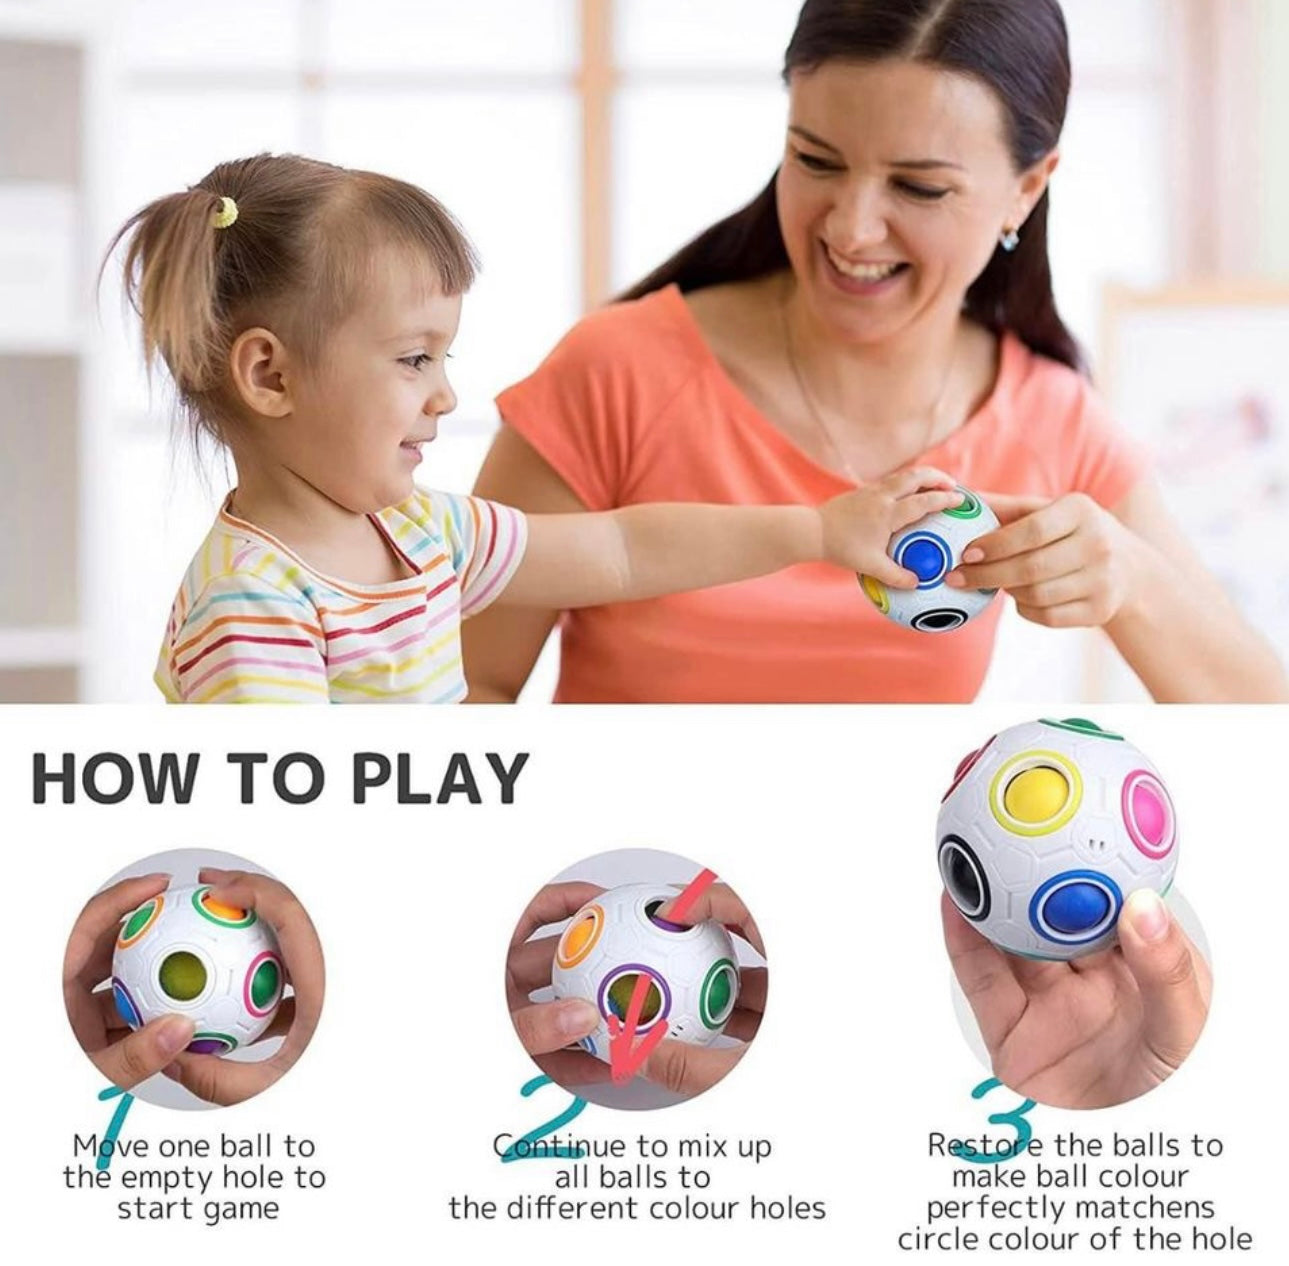 12Pcs Sensory Fidget Toys Gift Set,PopIt Party Favors, Autistic ADHD Stress Relief Tools Poppers